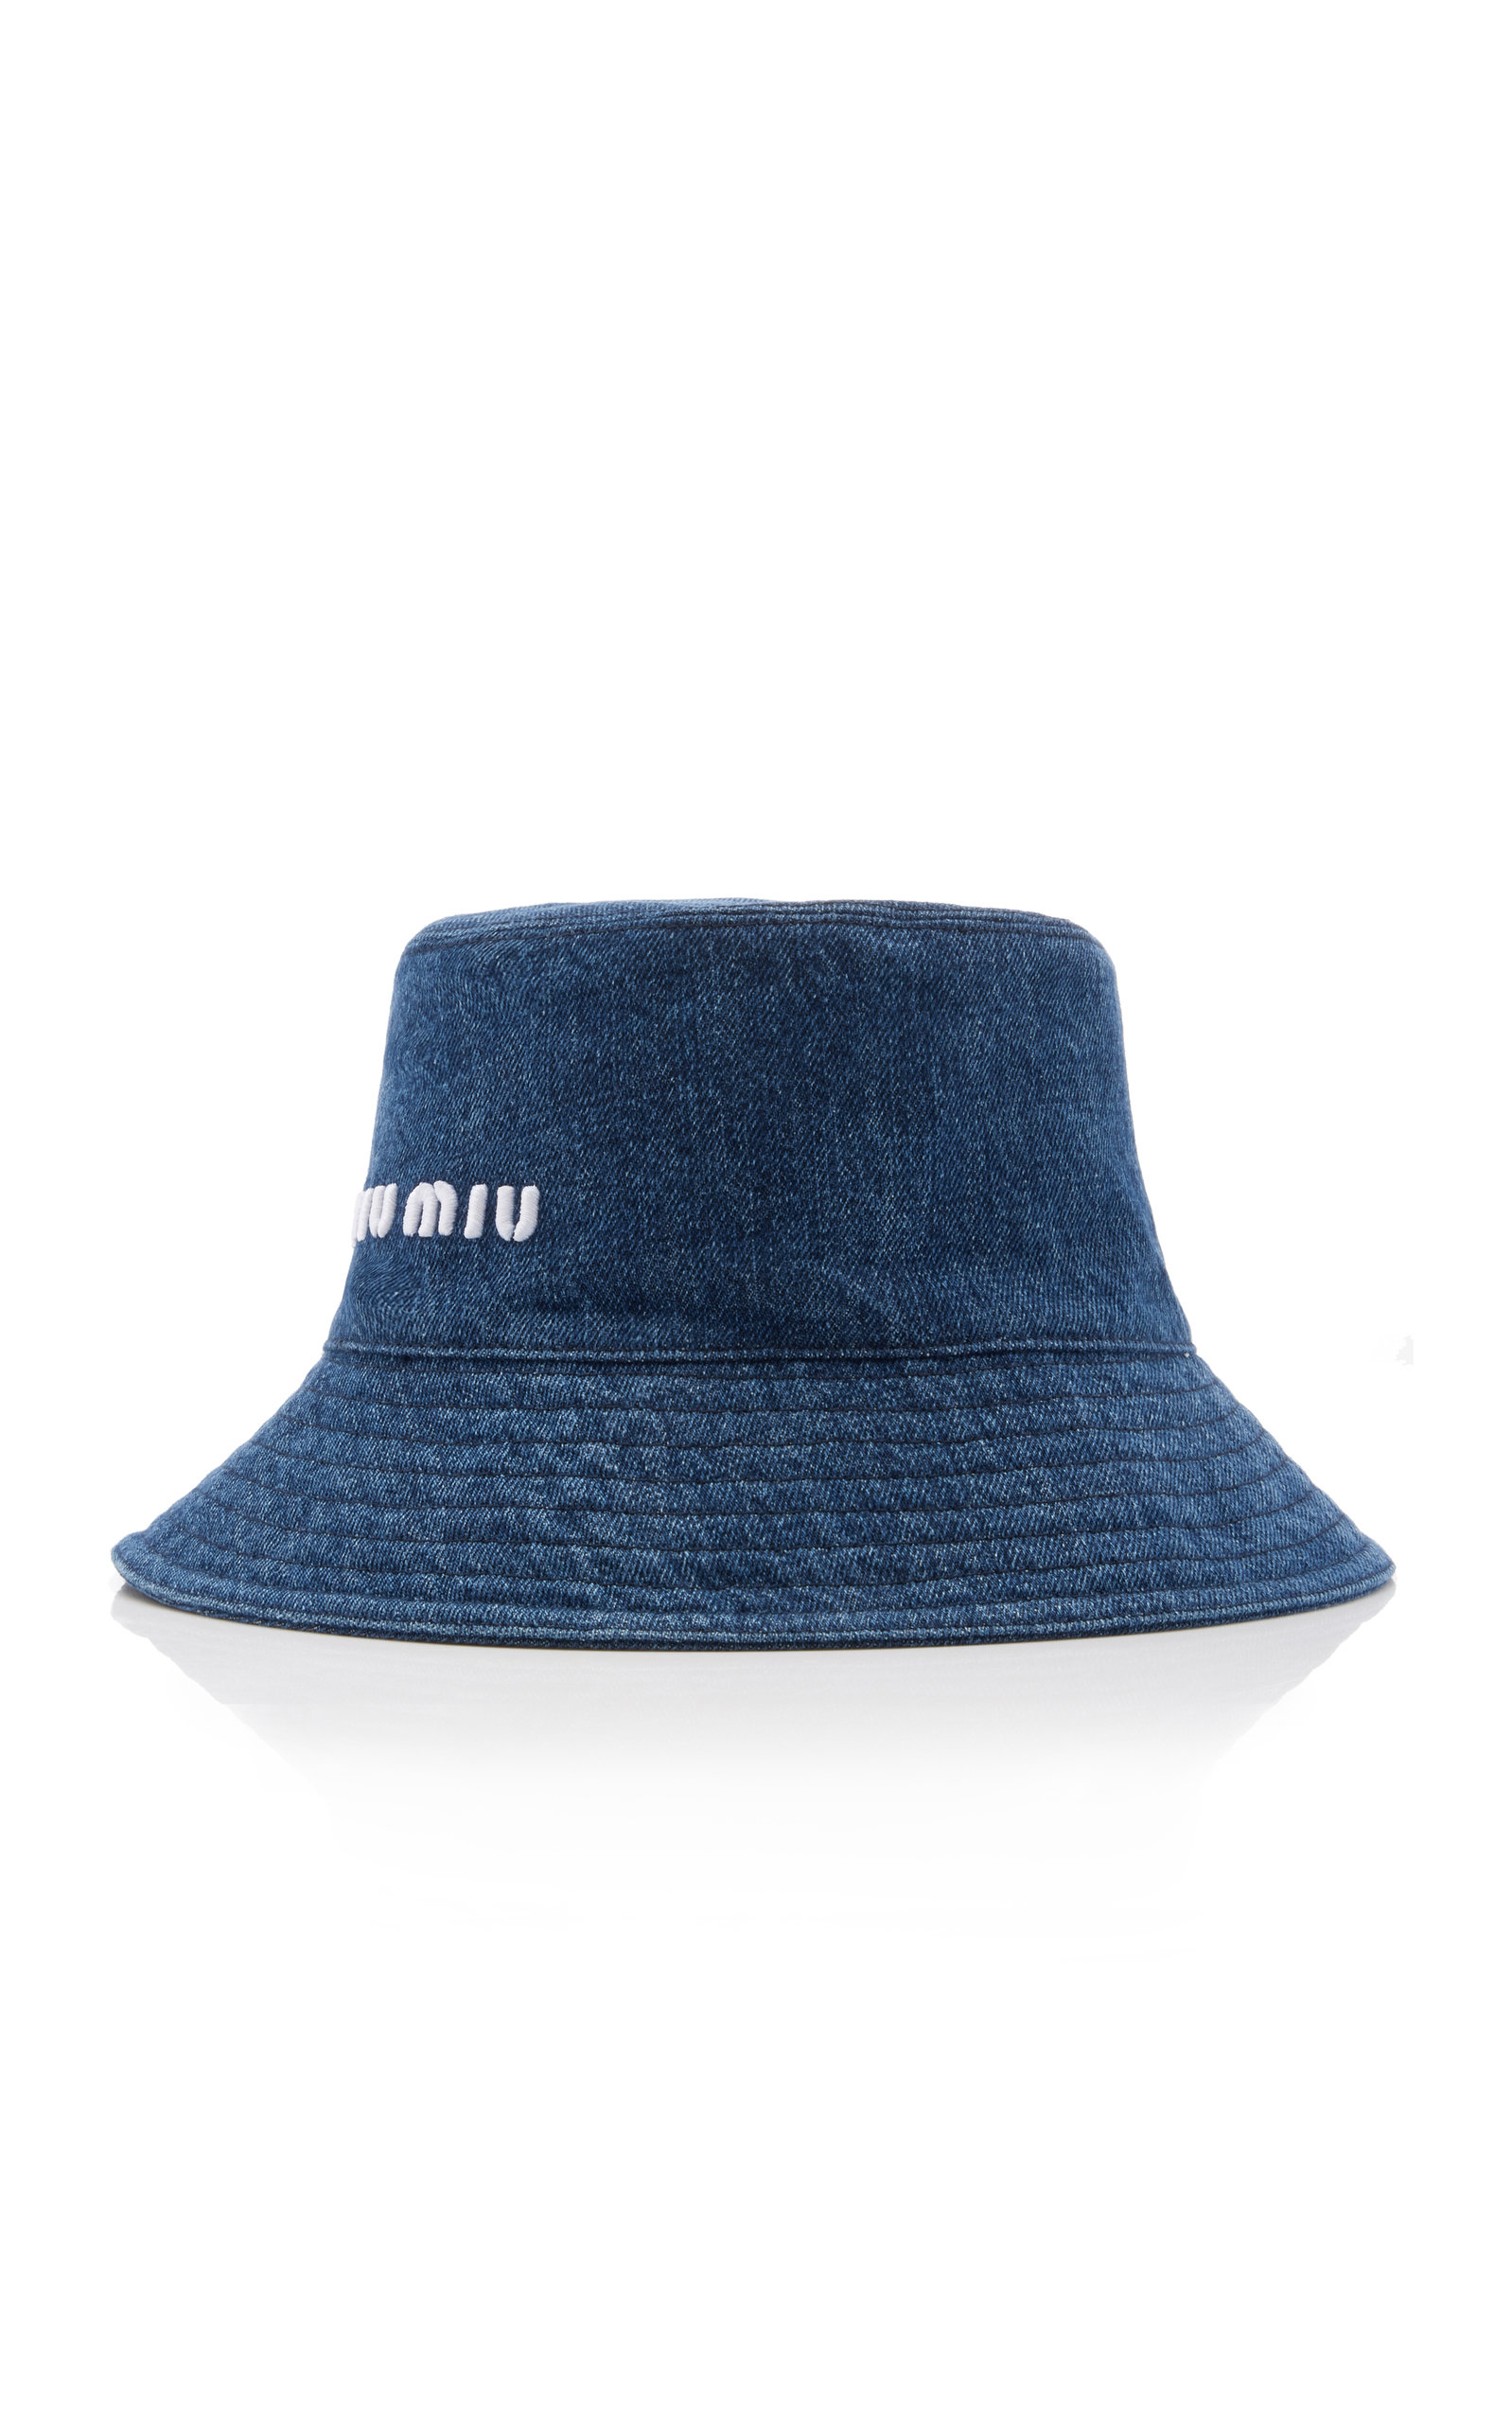 Miu Miu Denim Fisherman Hat in Blue